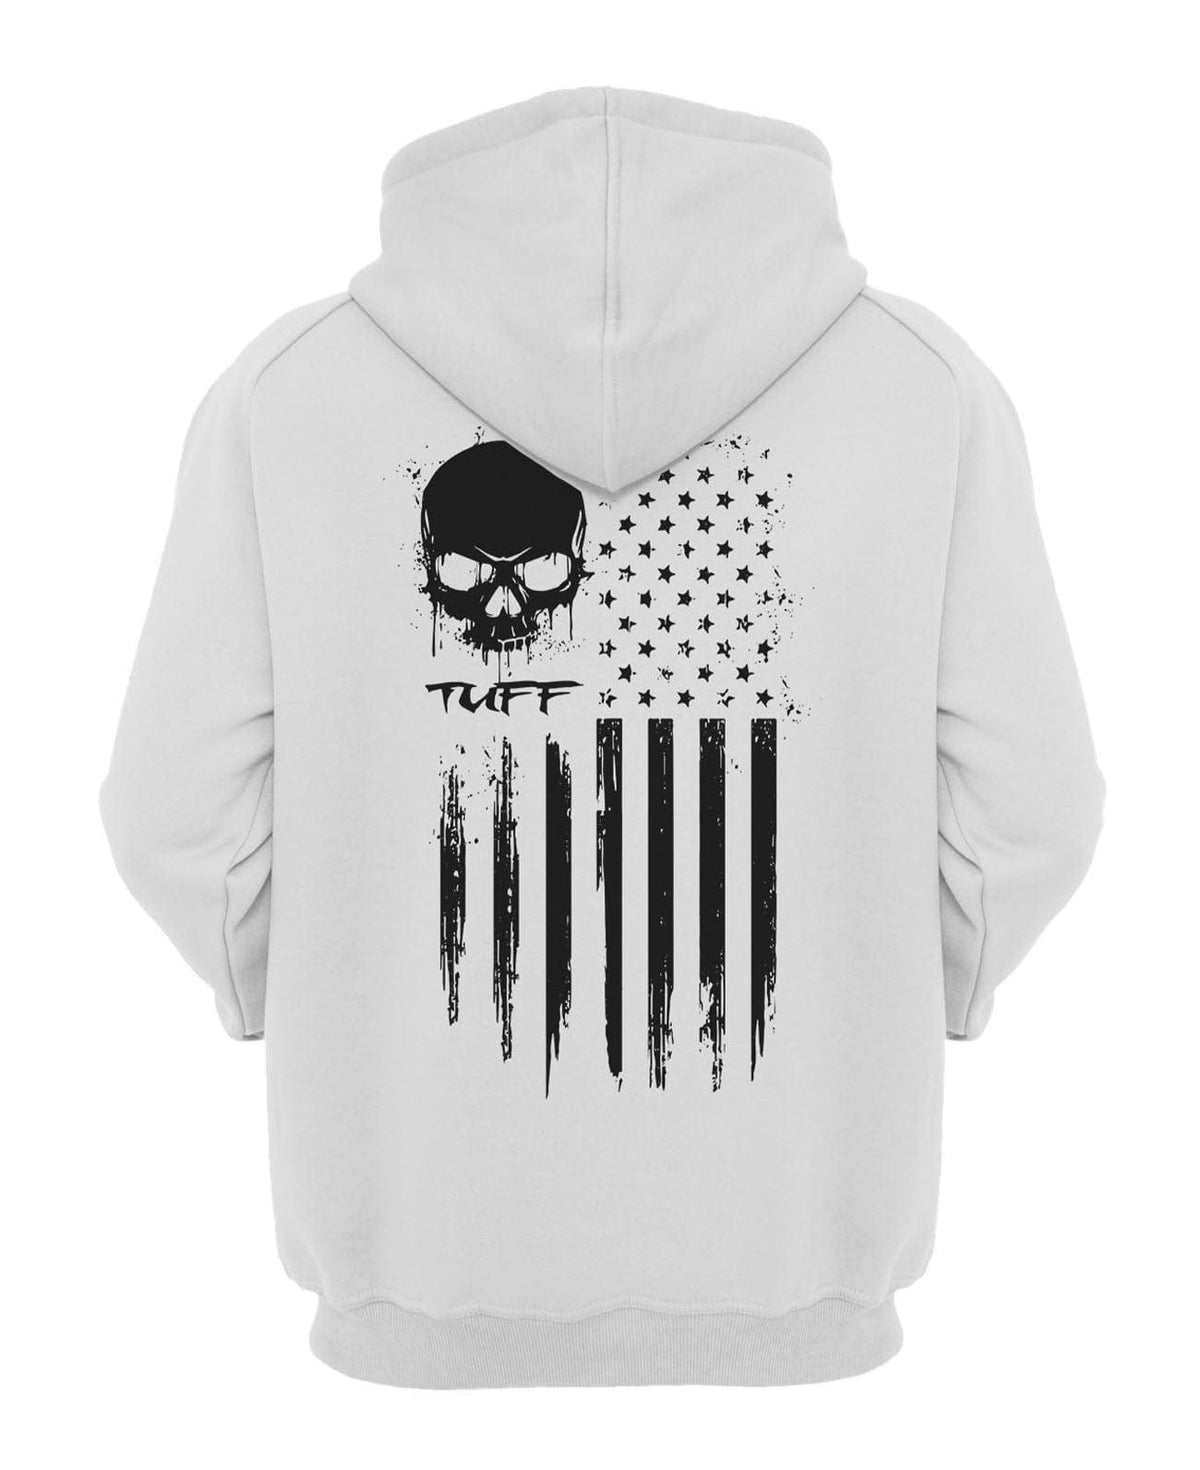 TUFF Skull Flag Hooded Sweatshirt XS / White TuffWraps.com